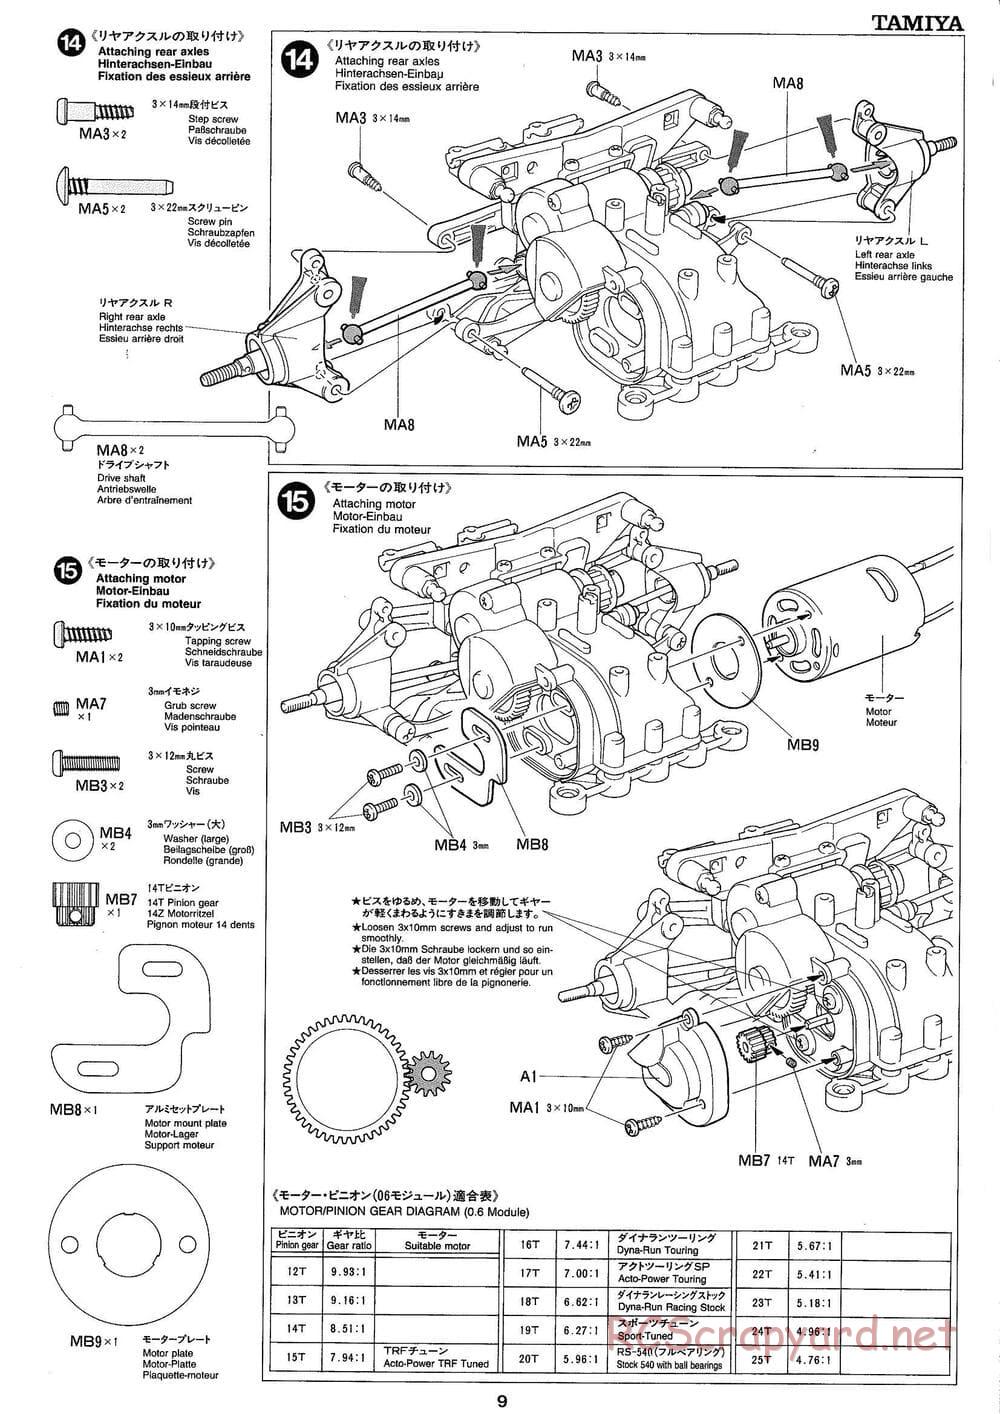 Tamiya - Mobil 1 NSX - TA-03R Chassis - Manual - Page 9